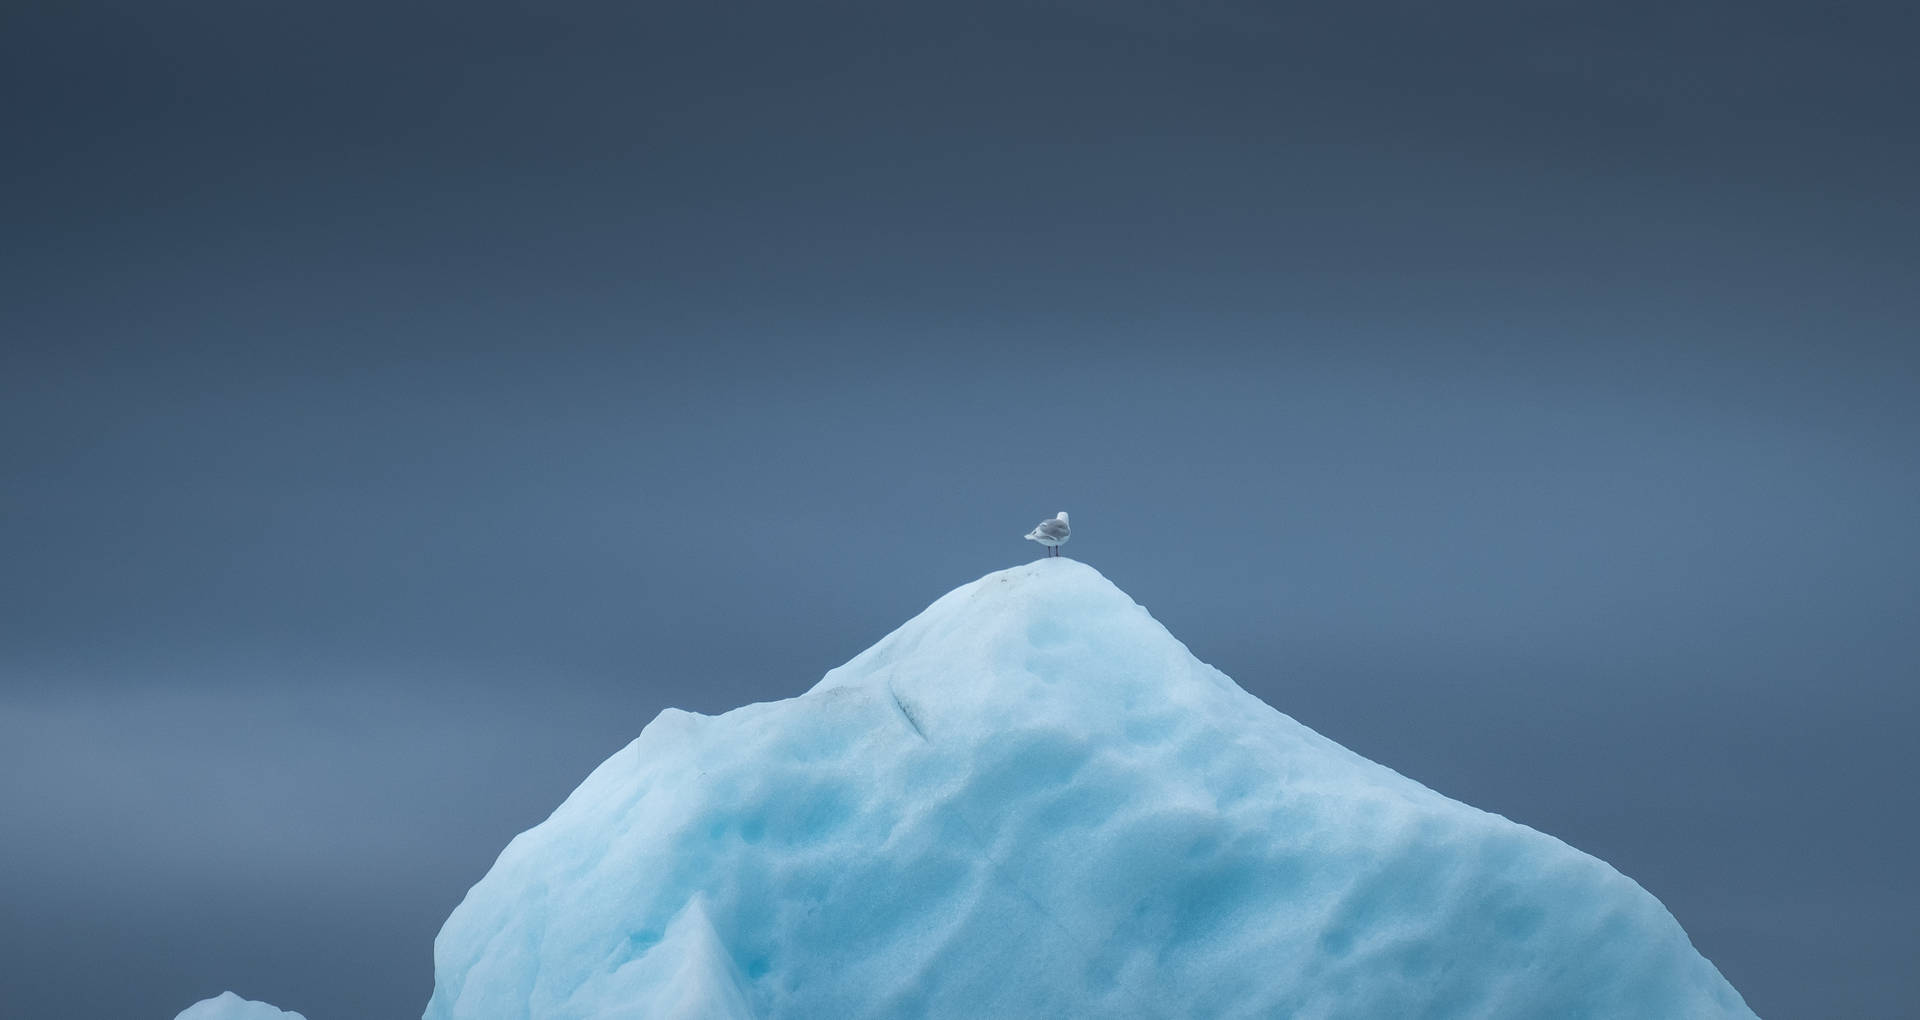 Greenland Iceberg With Sea Bird